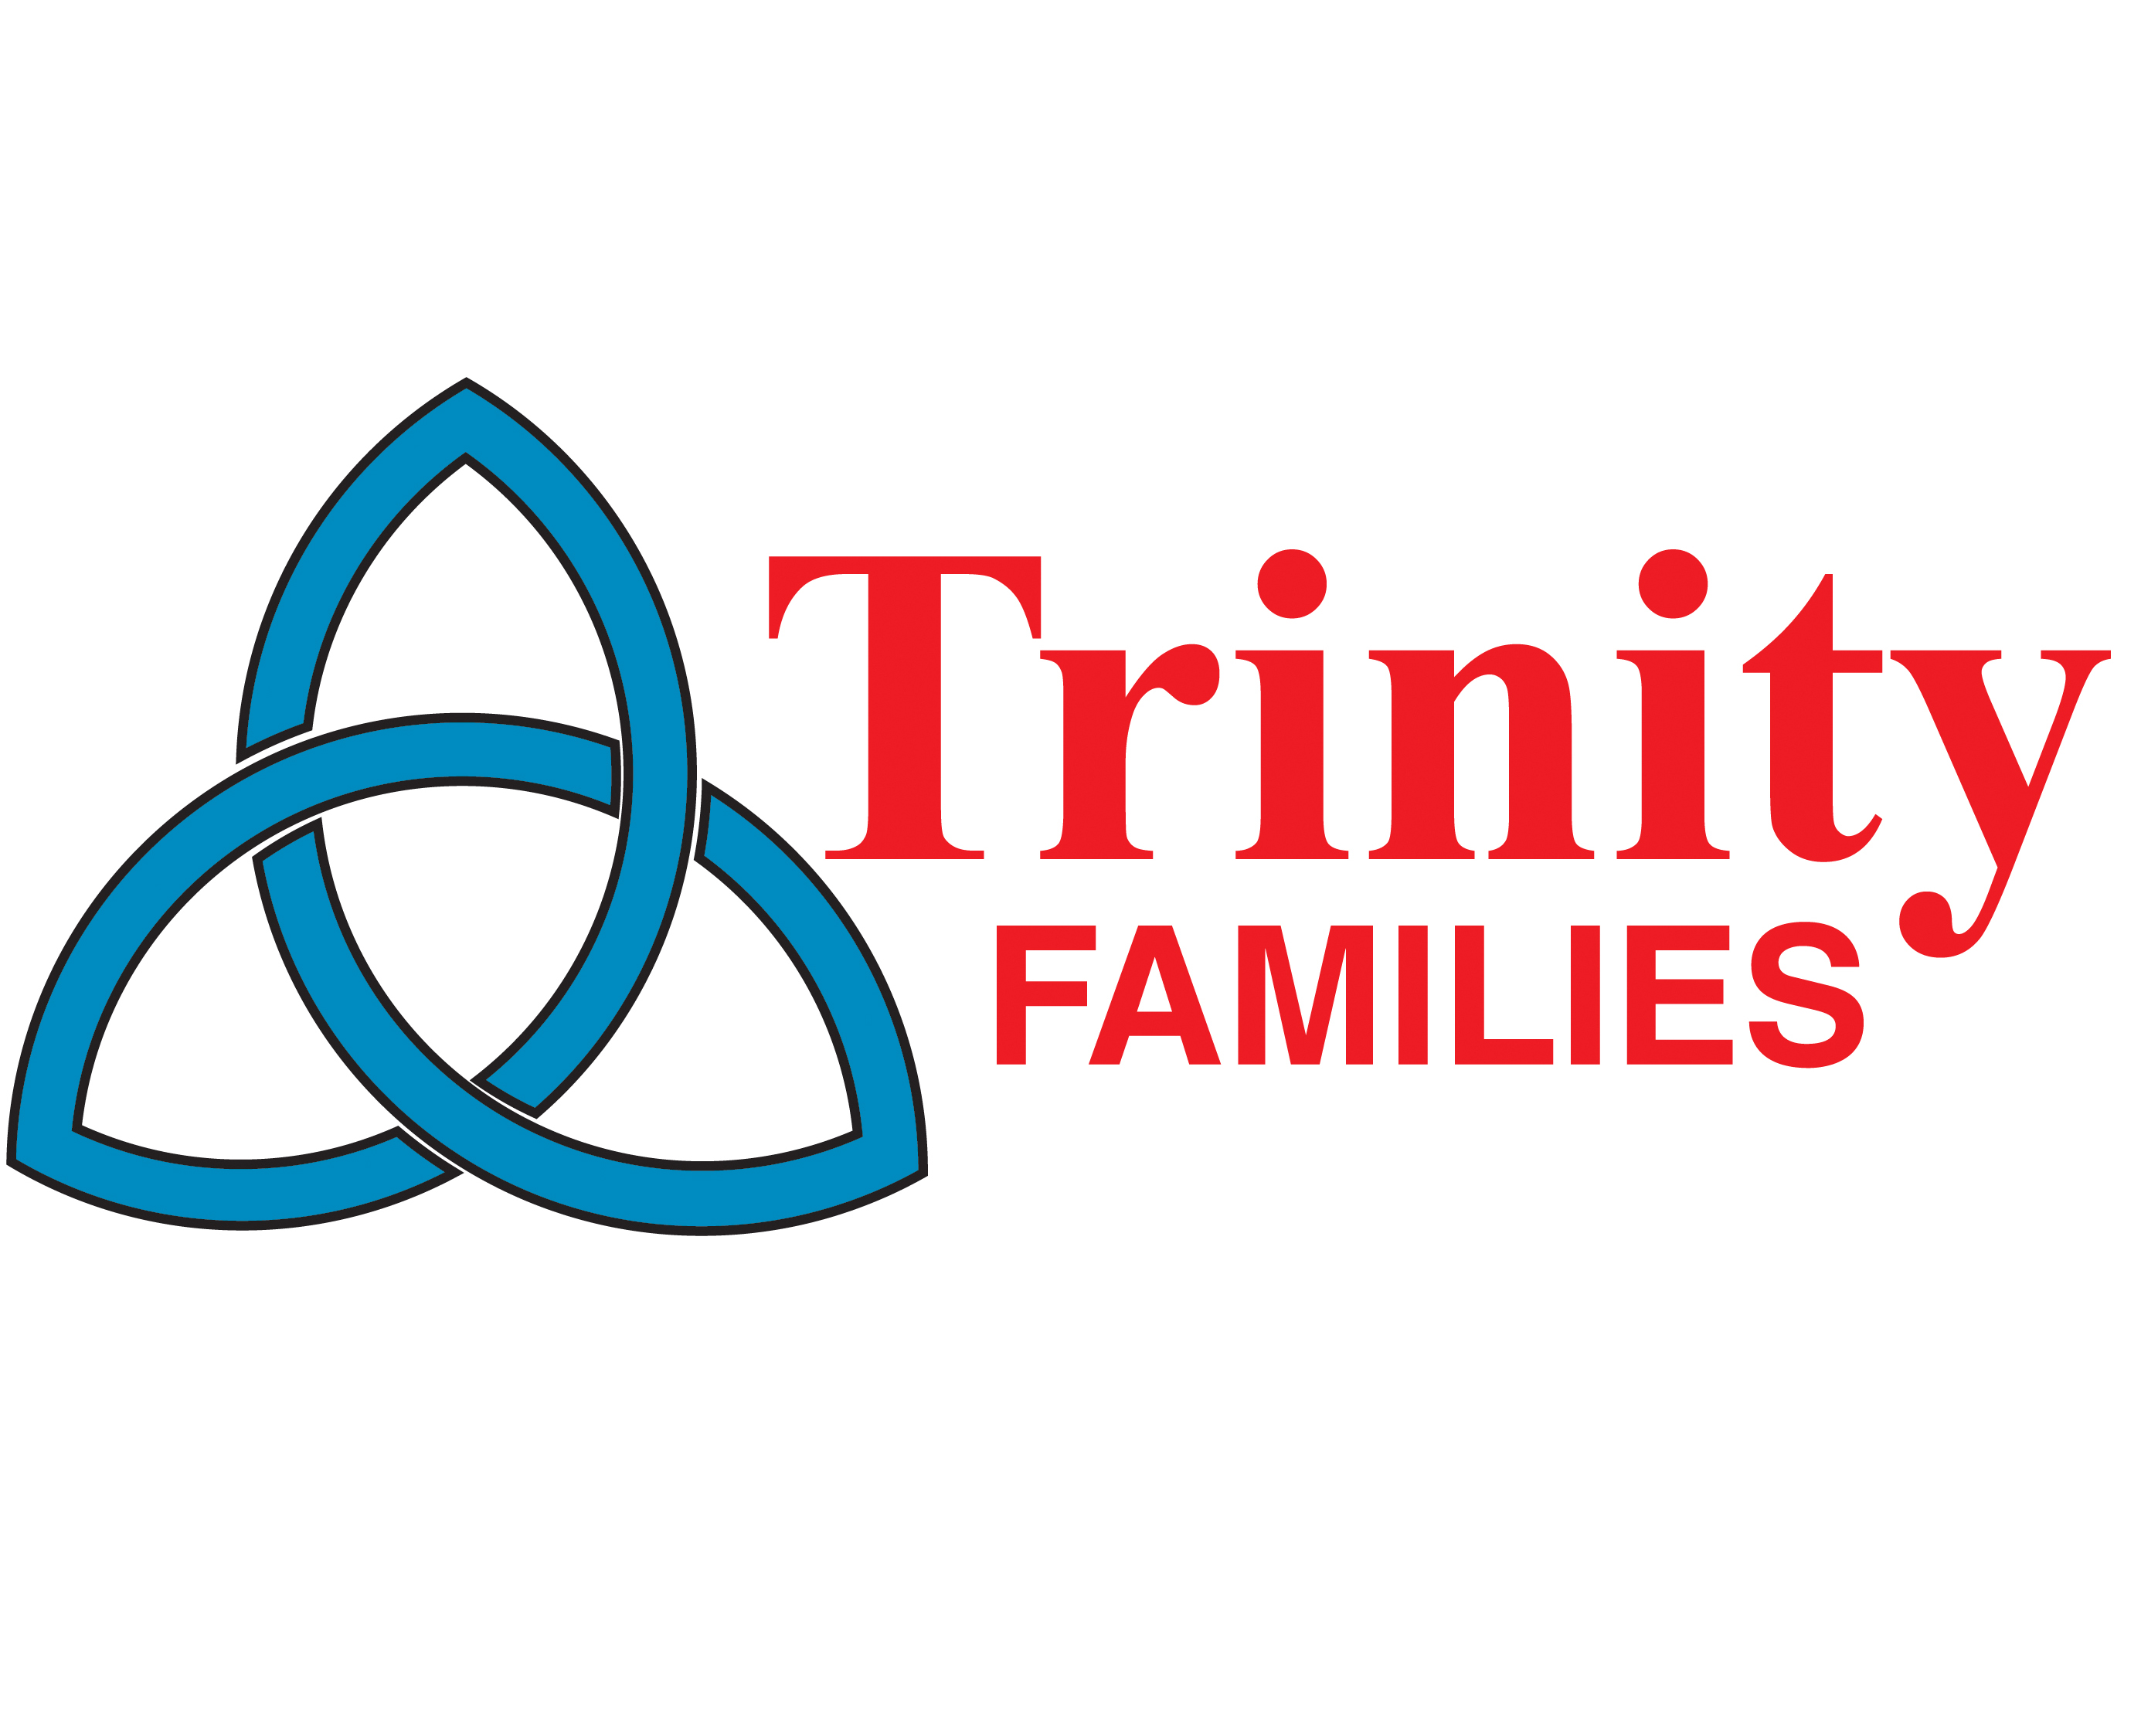 Trinity families logo